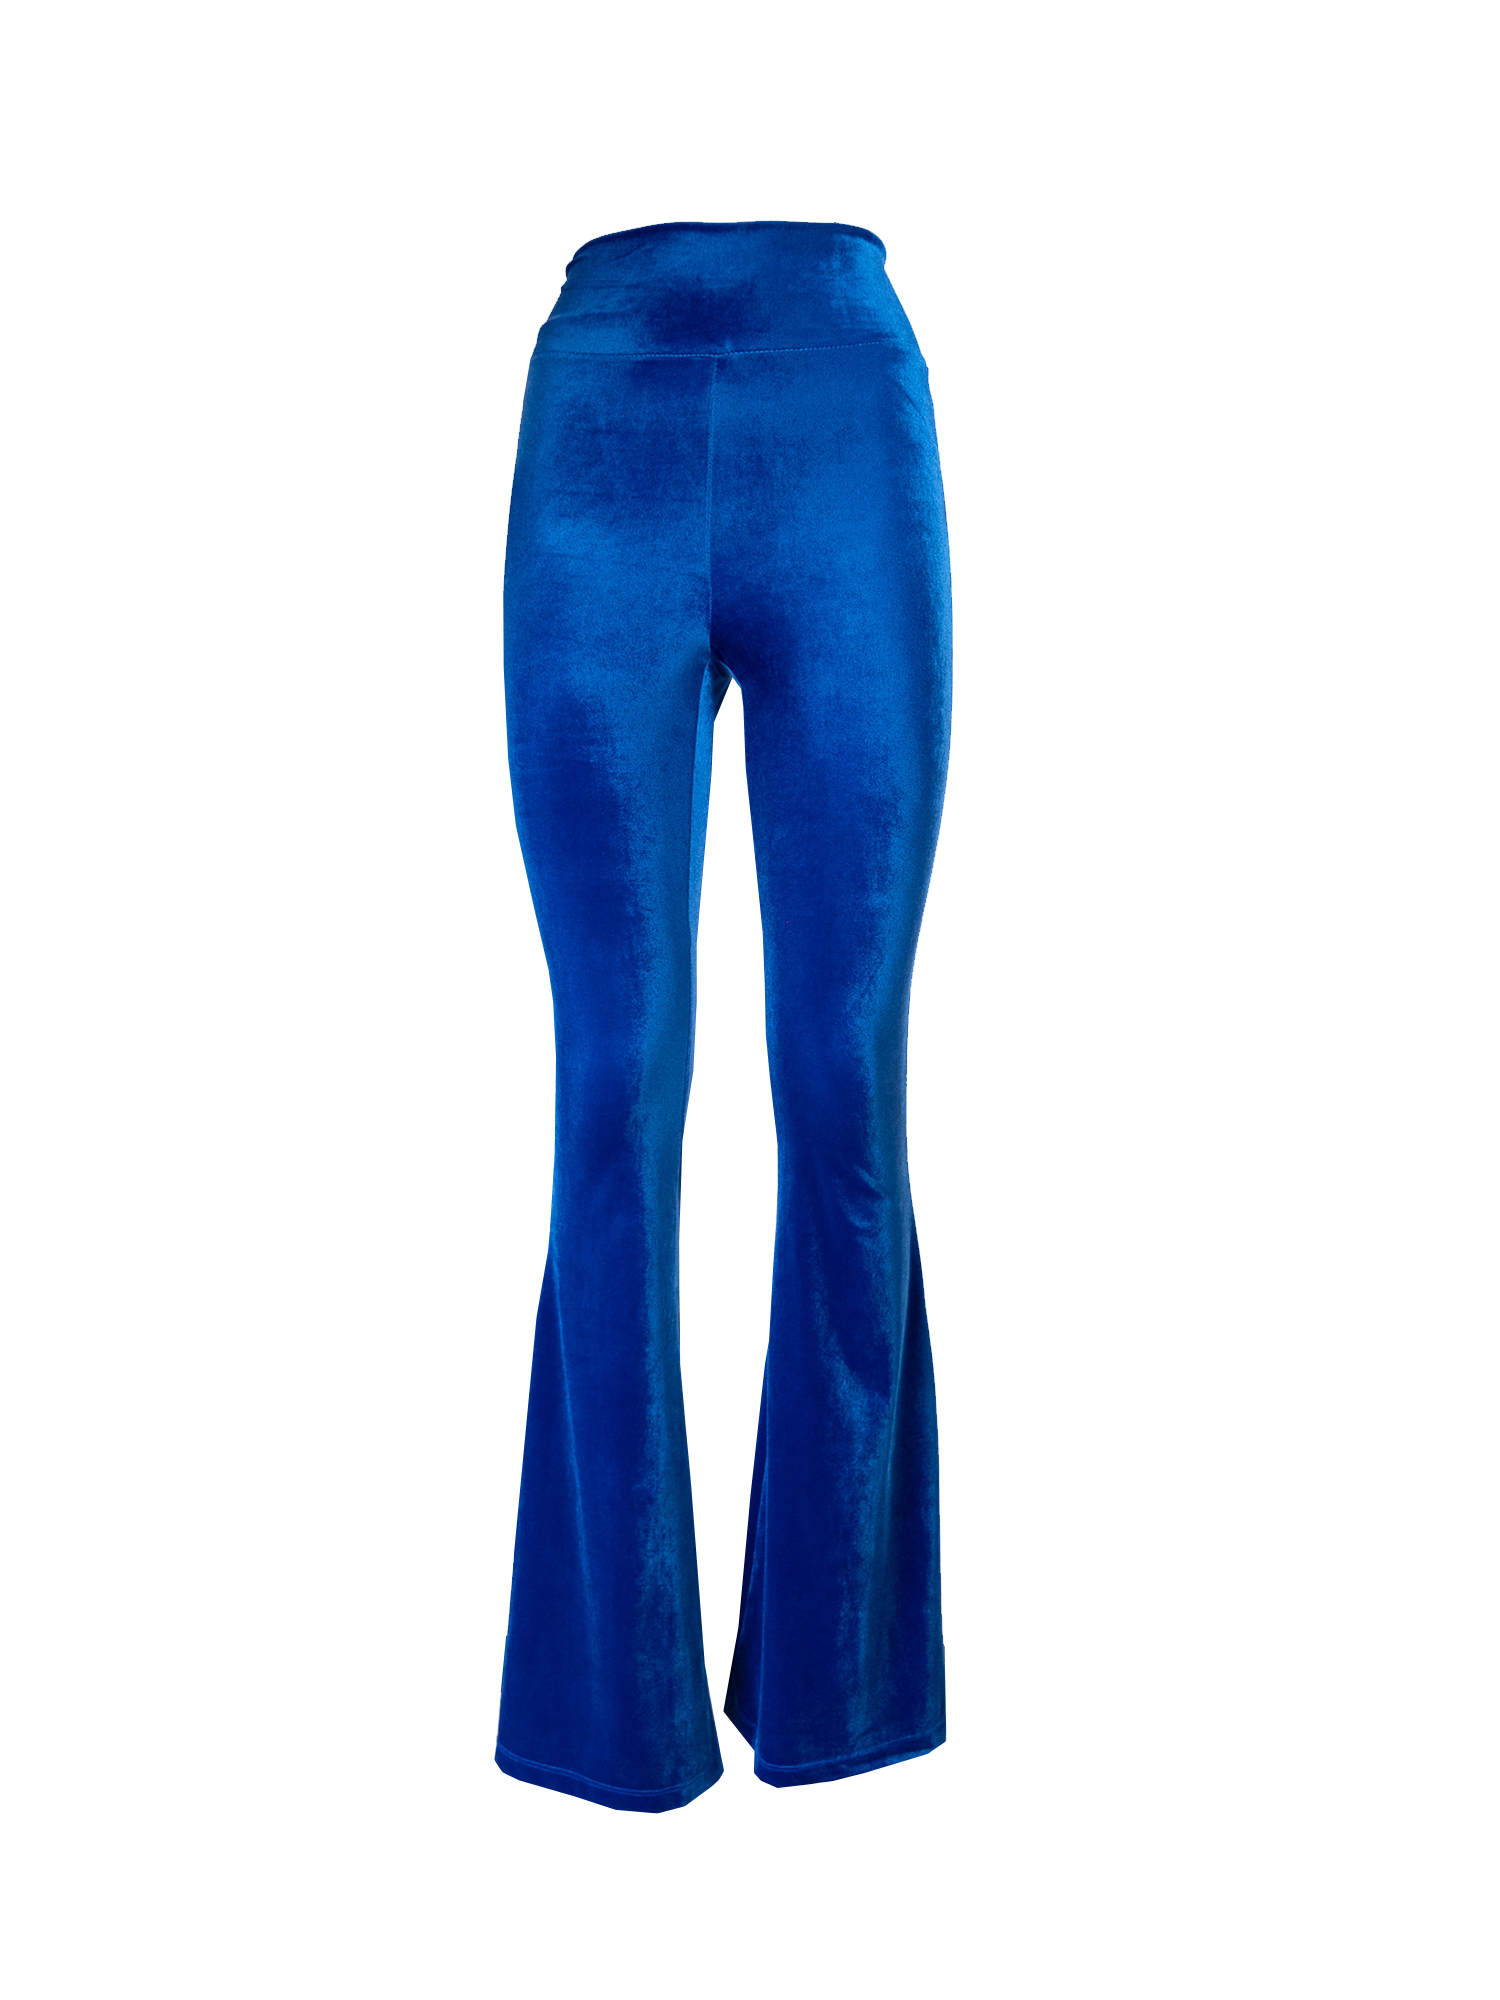 LOLA - flared pants in bluette chenille